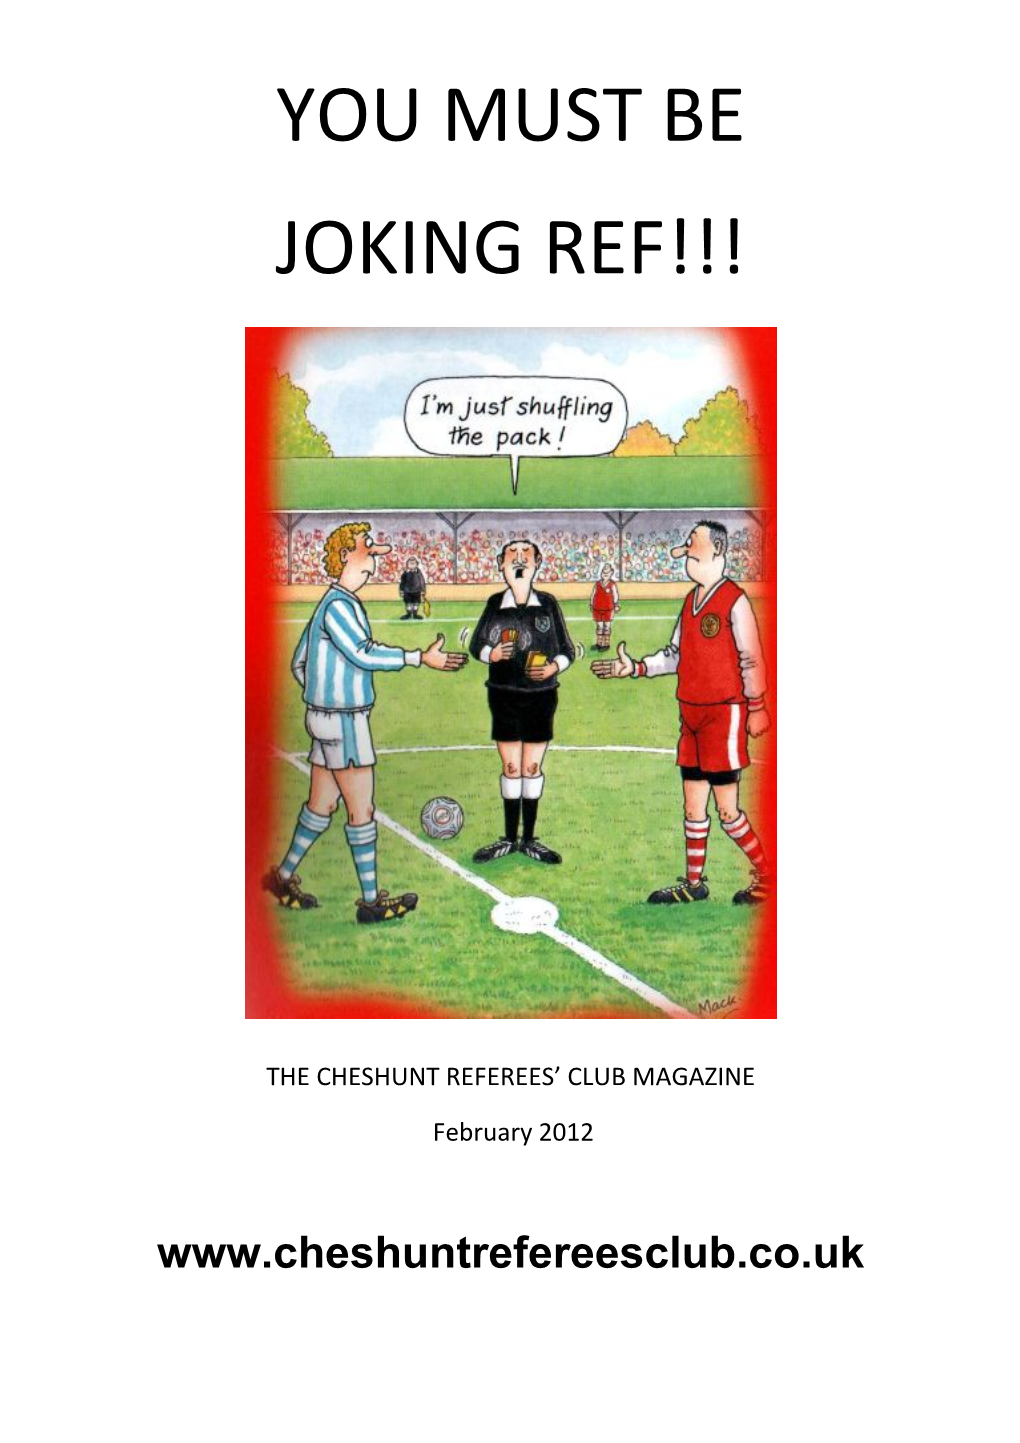 The Cheshunt Referees Club Magazine